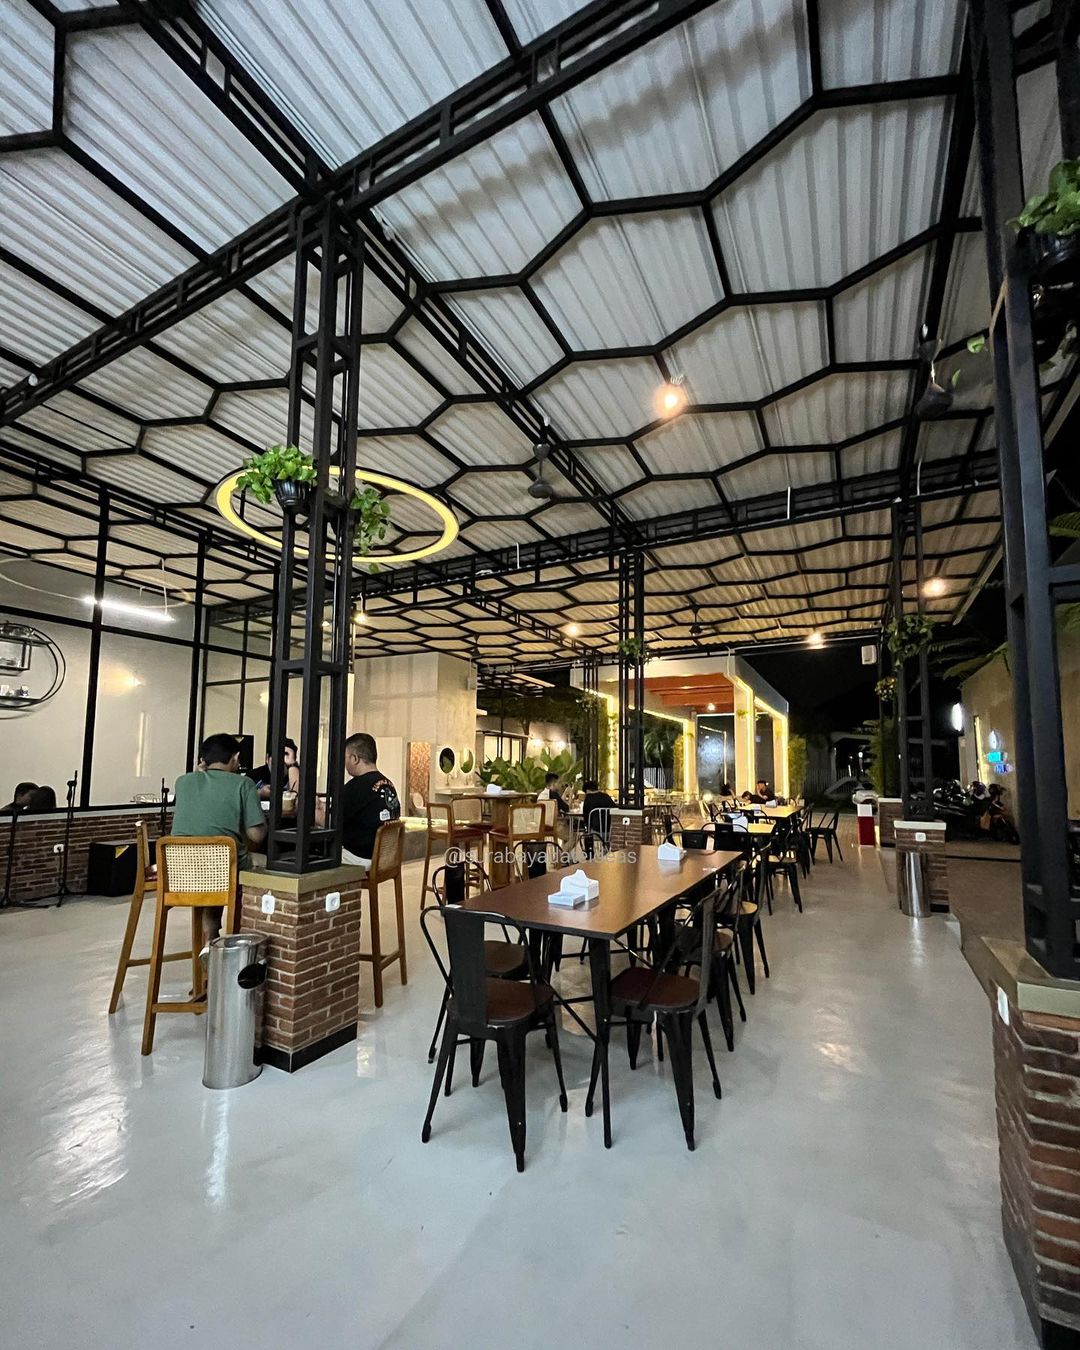 Review Sermo Cafe Surabaya Image From @surabayadateideas